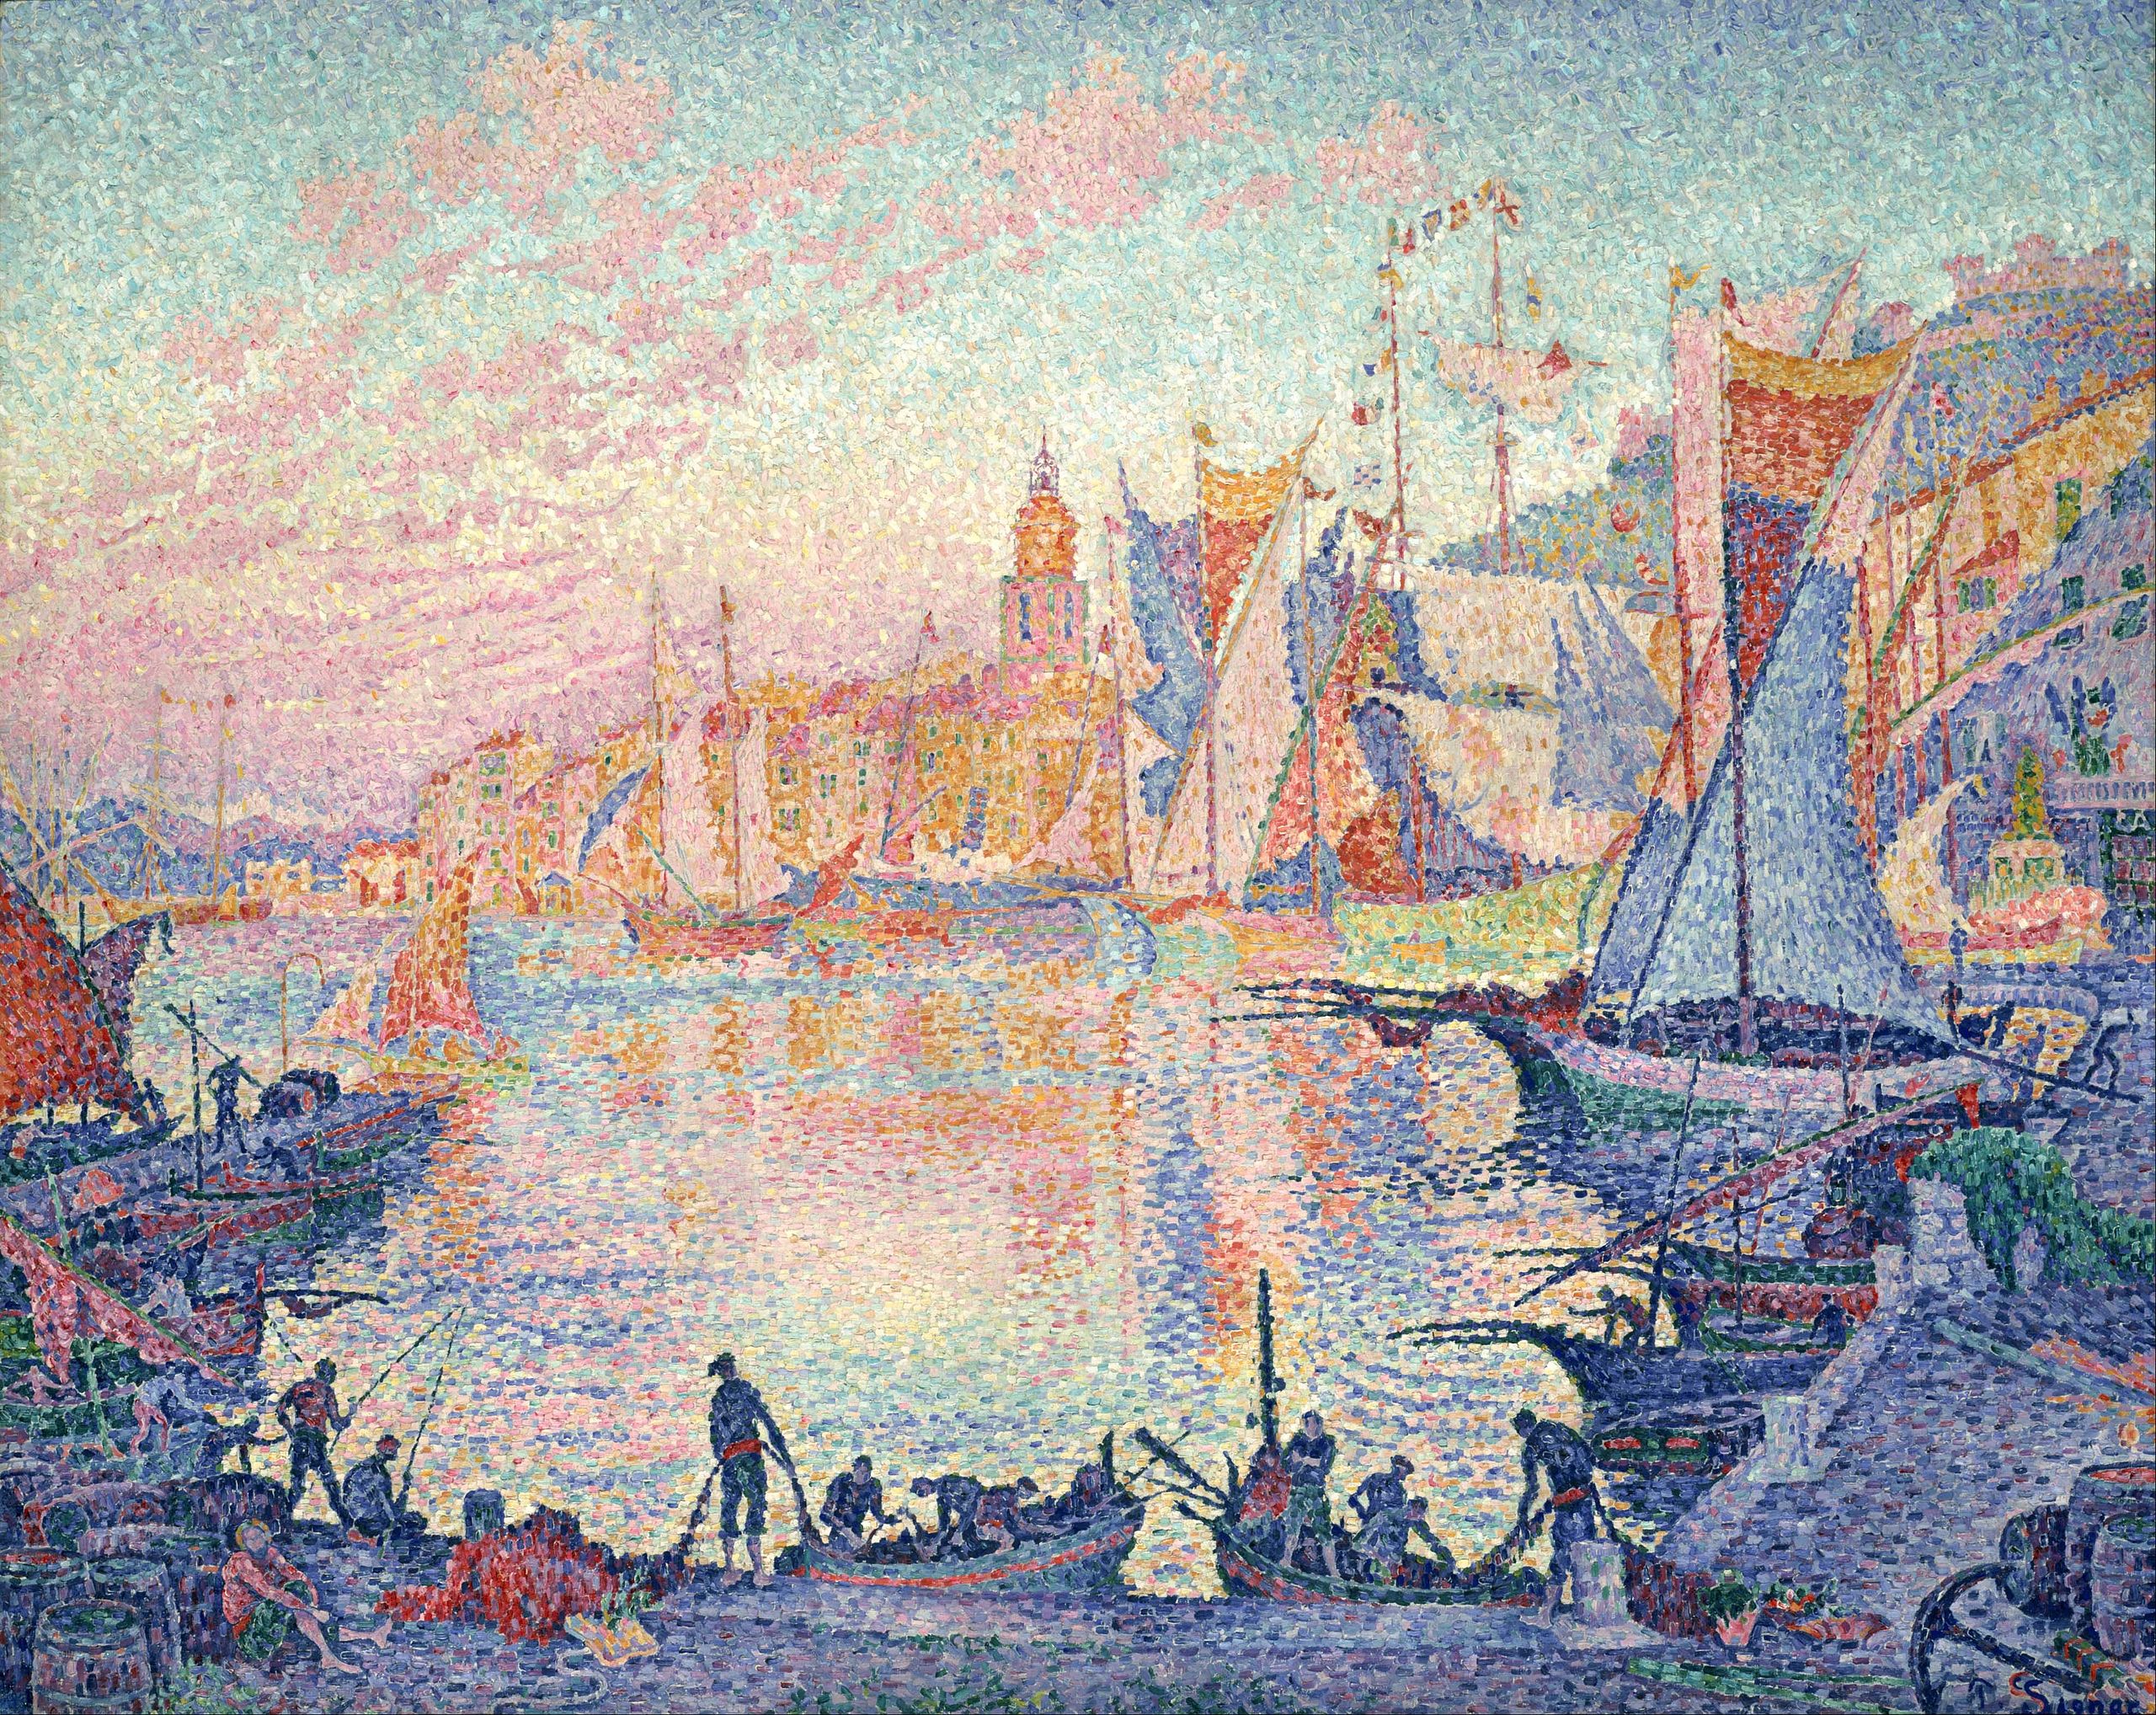 O Porto de Saint-Tropez by Paul Signac - 1901-1902 - 131 x 161.5 cm 